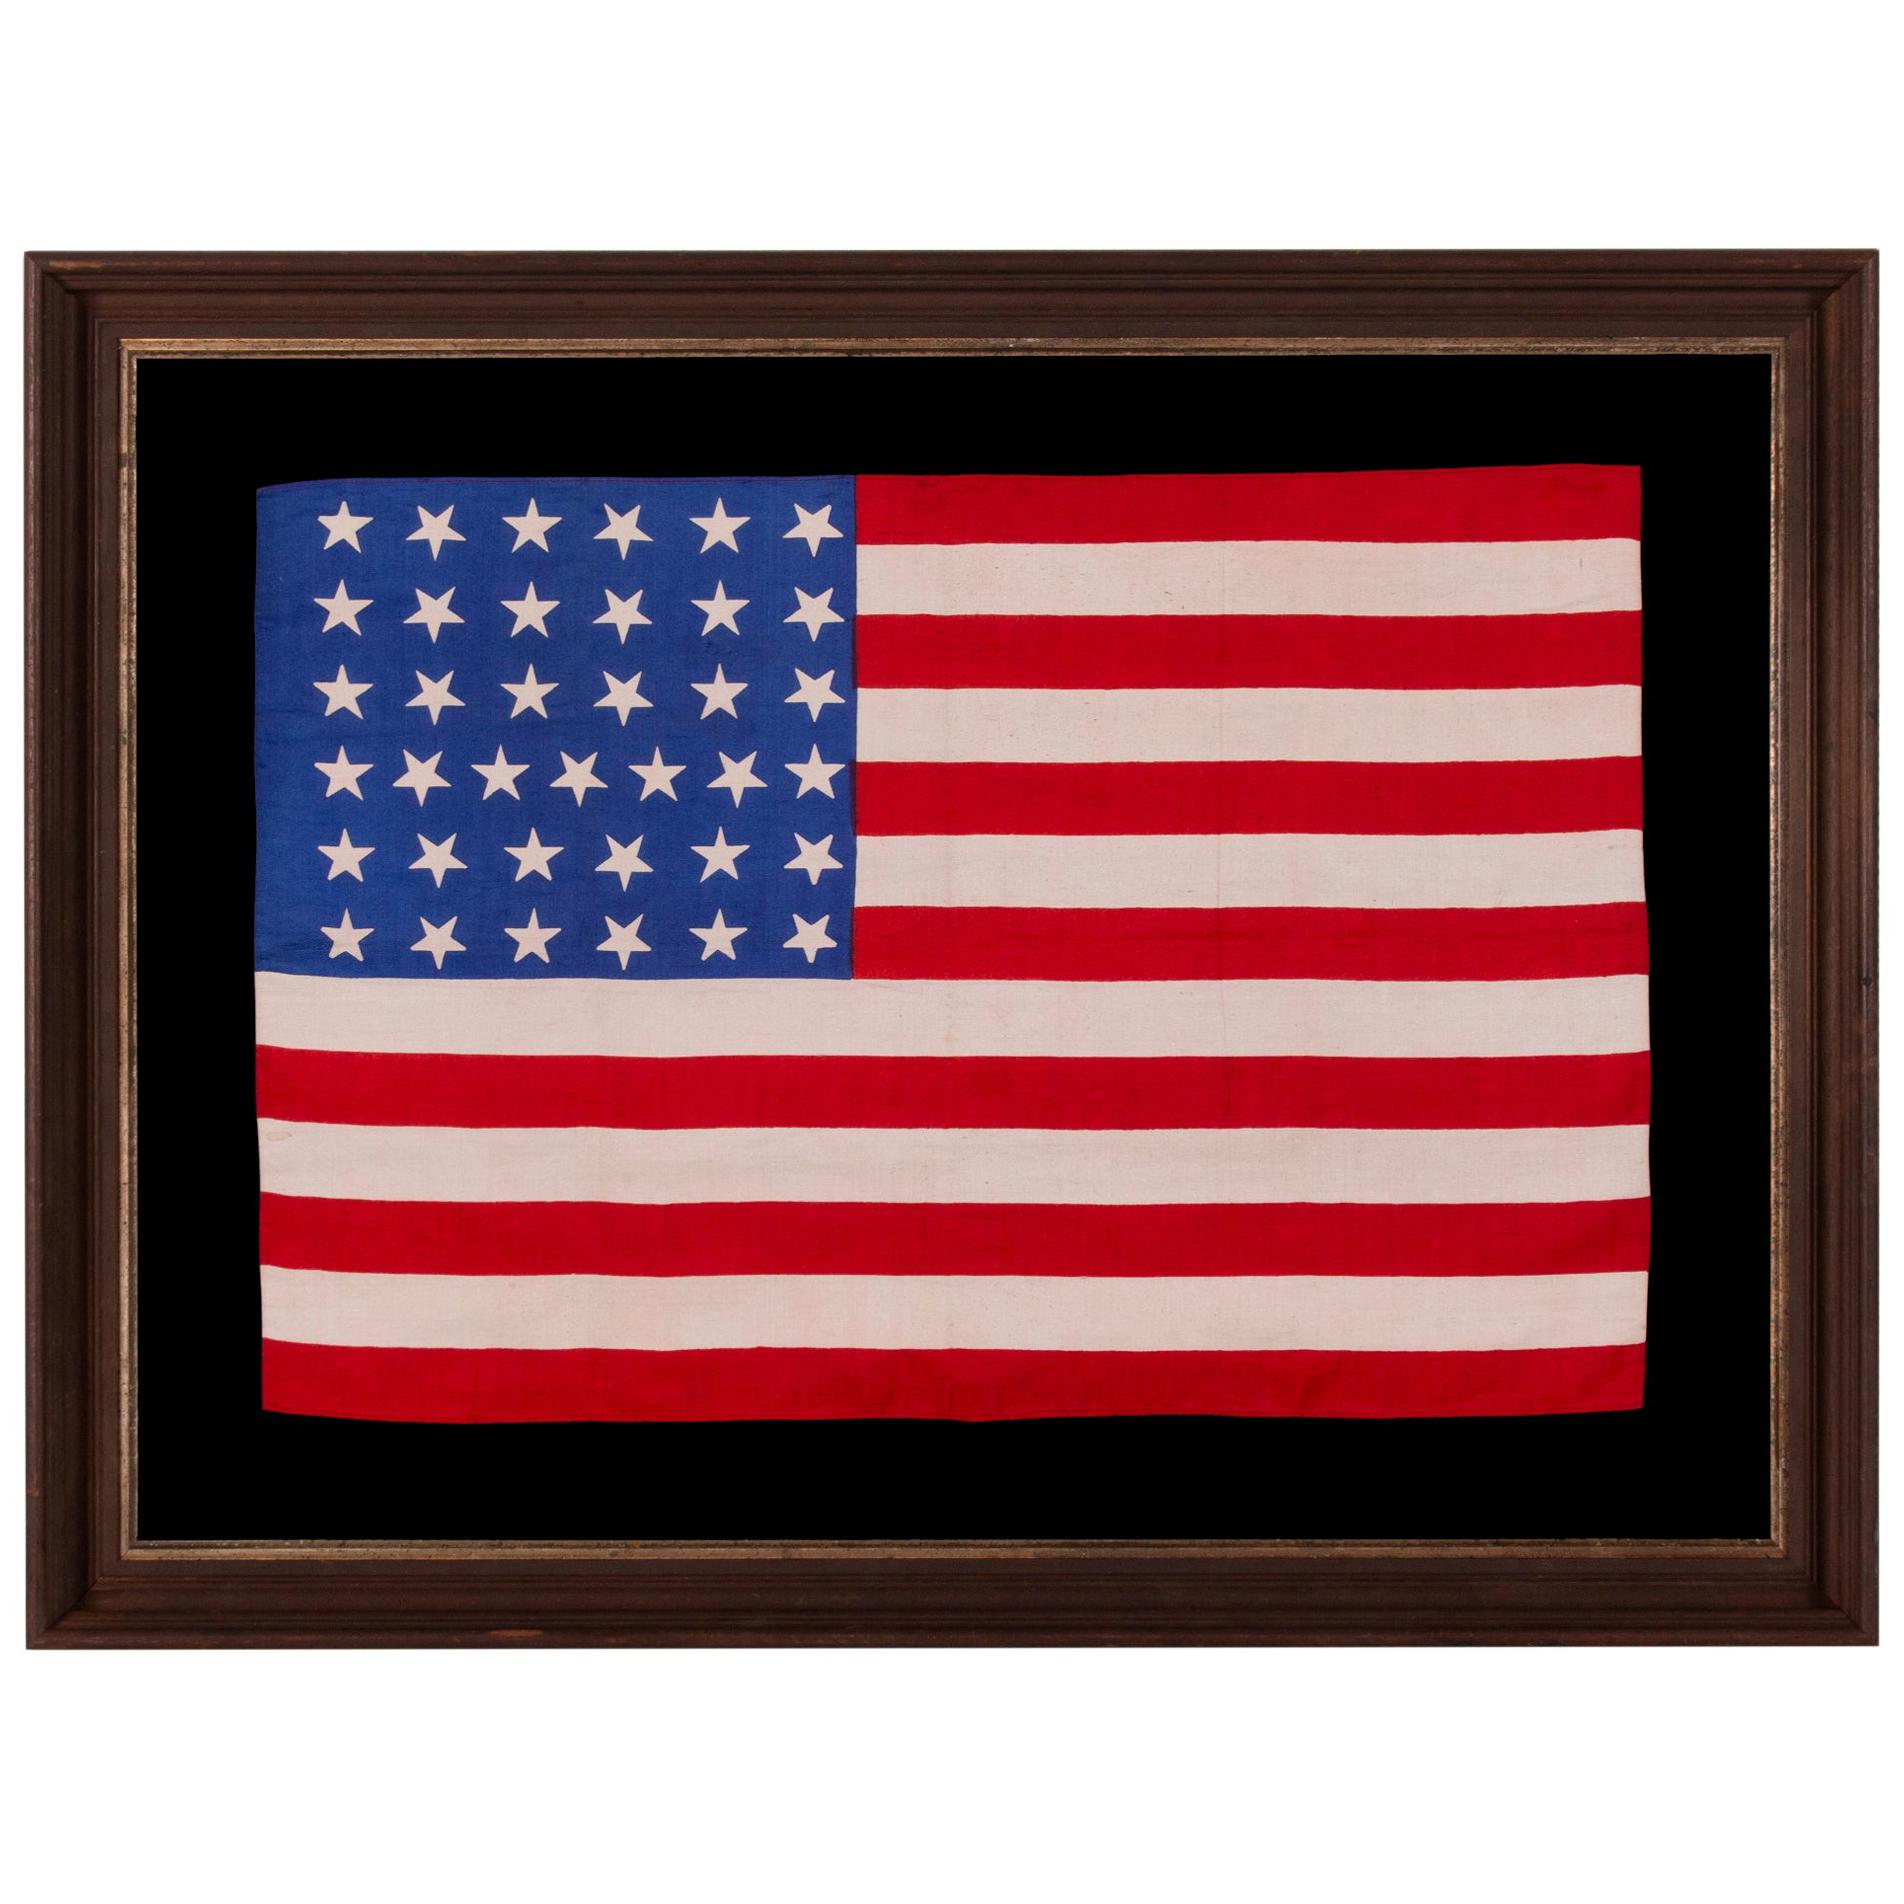 37 Star Antique American Flag, Nebraska Statehood, circa 1867-1876